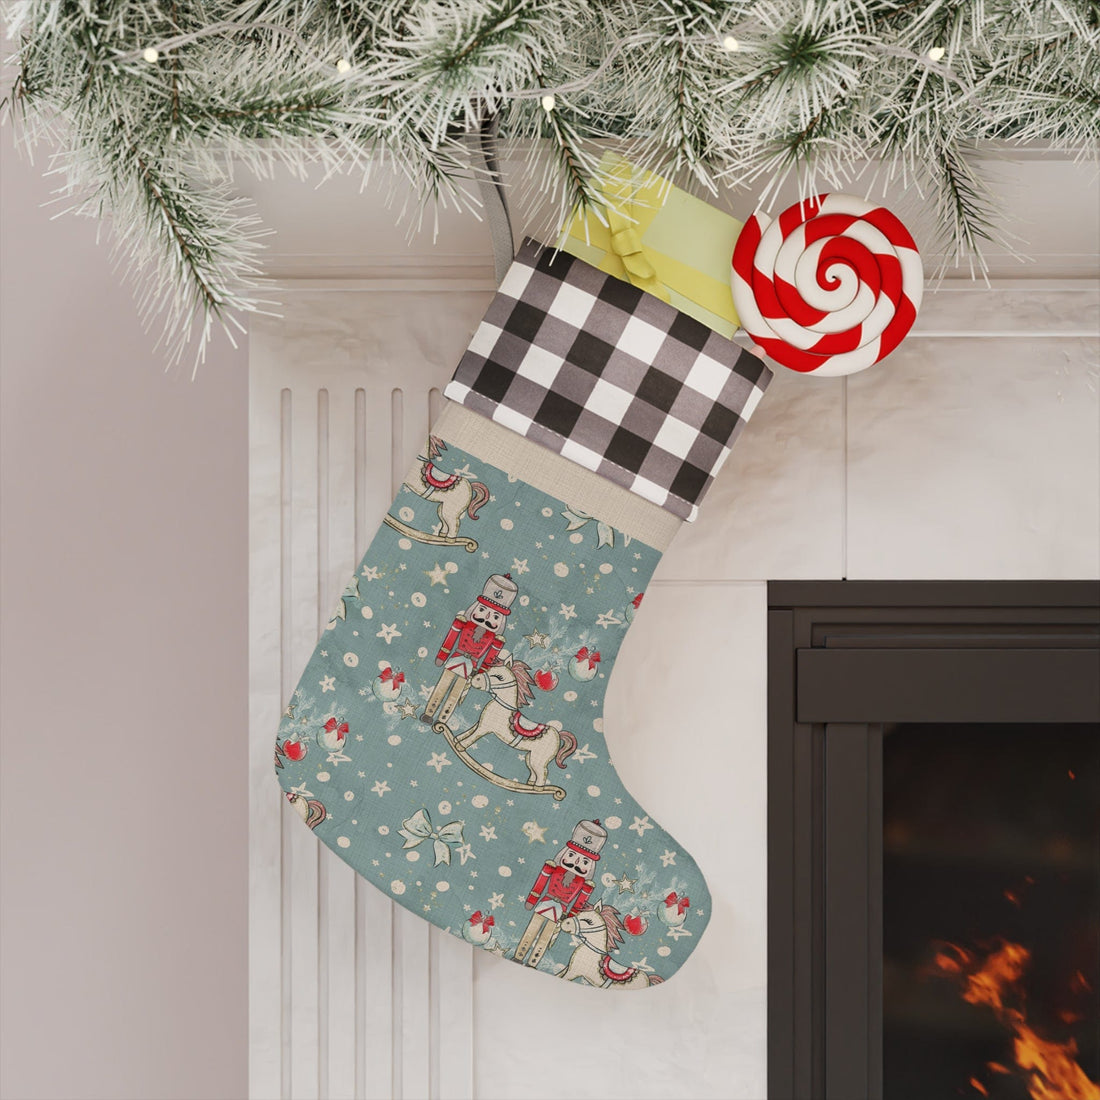 Kate McEnroe New York Festive Nutcracker Christmas Stocking: Plaid Top, Burlap Linen Boot, Spacious - Perfect Holiday Decor, Gift for KidsHoliday Stockings95850411104450938823